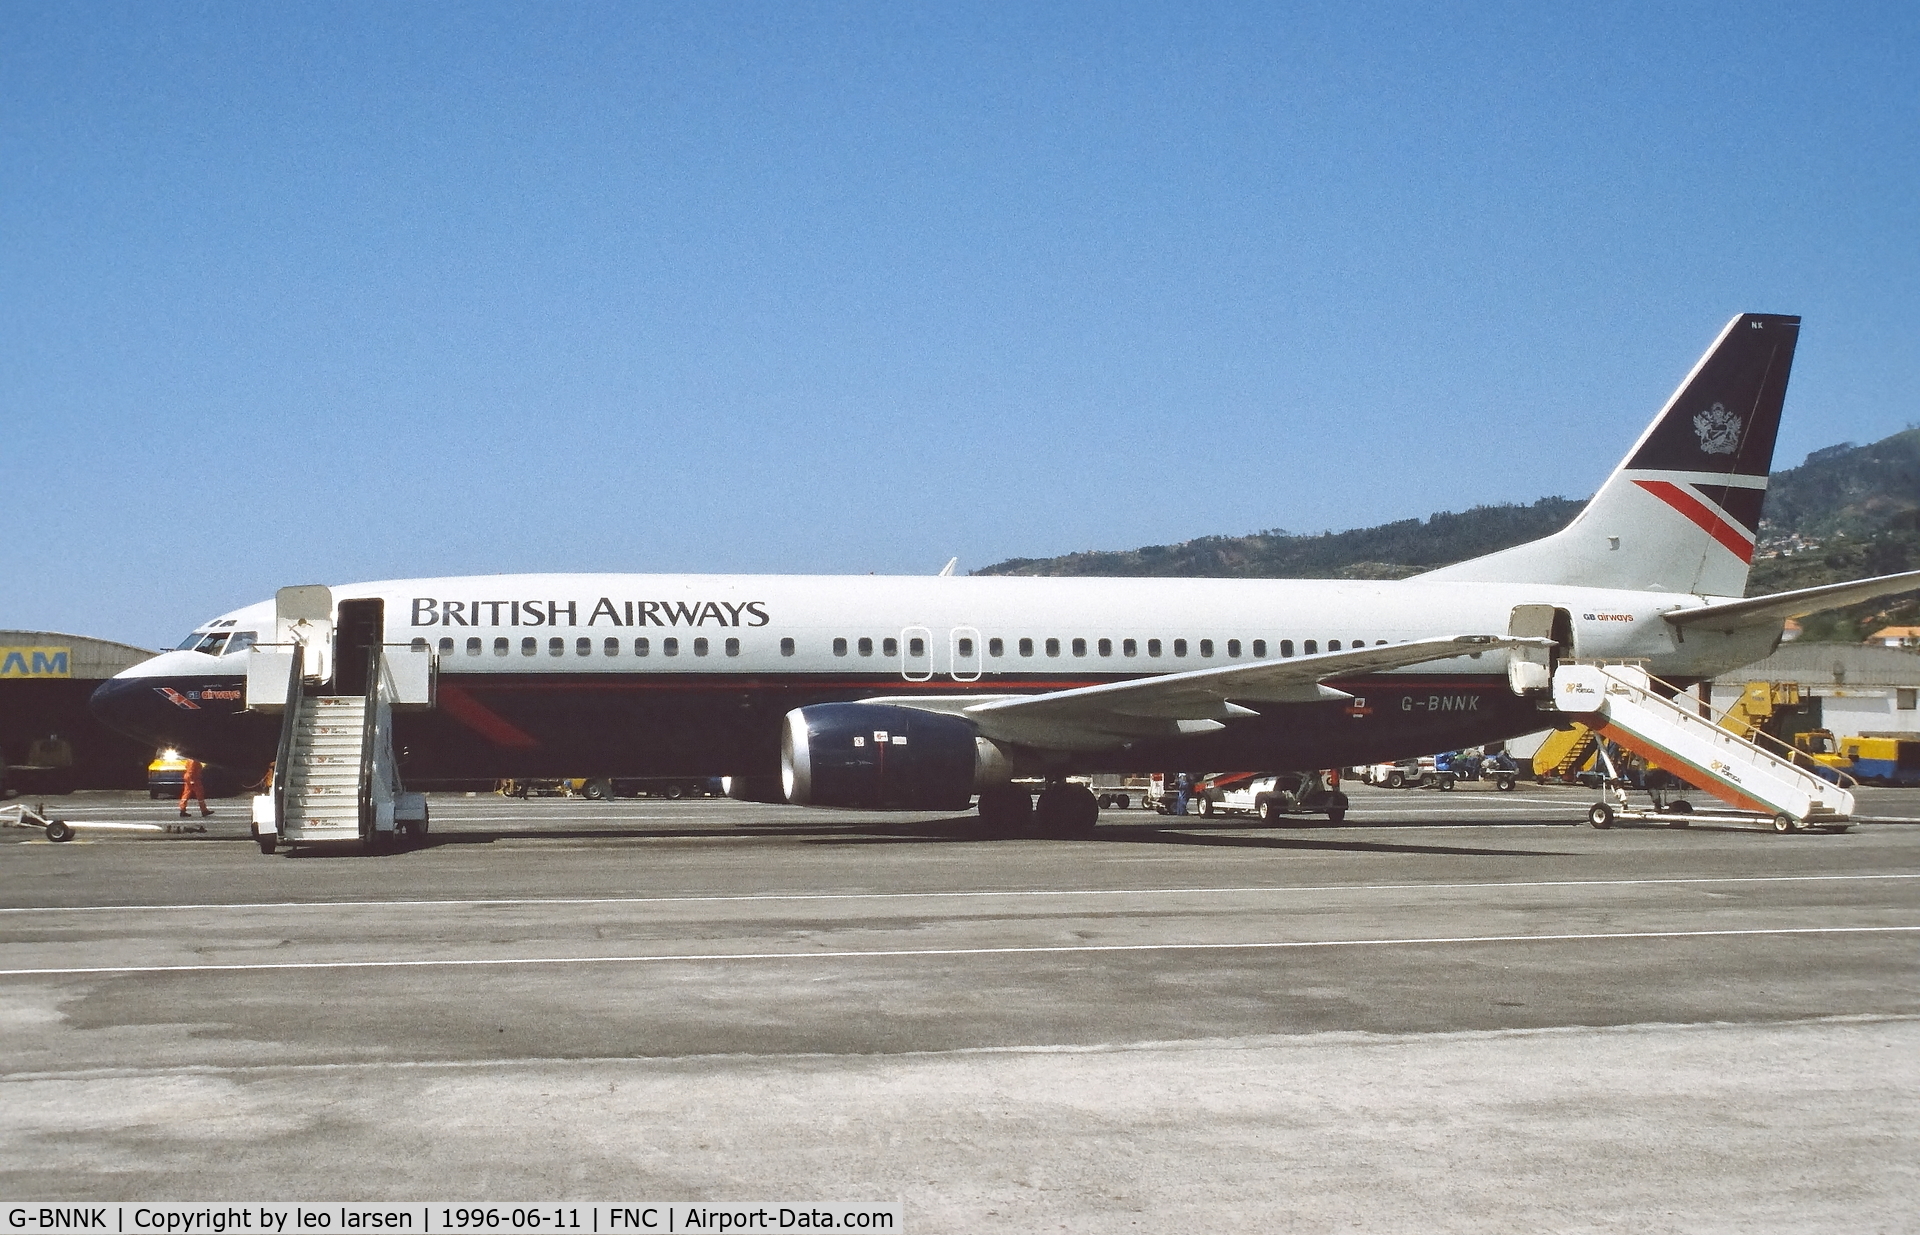 G-BNNK, 1988 Boeing 737-4Q8 C/N 24069, FNC Funchal 11.6.1996 with GB Airways marks